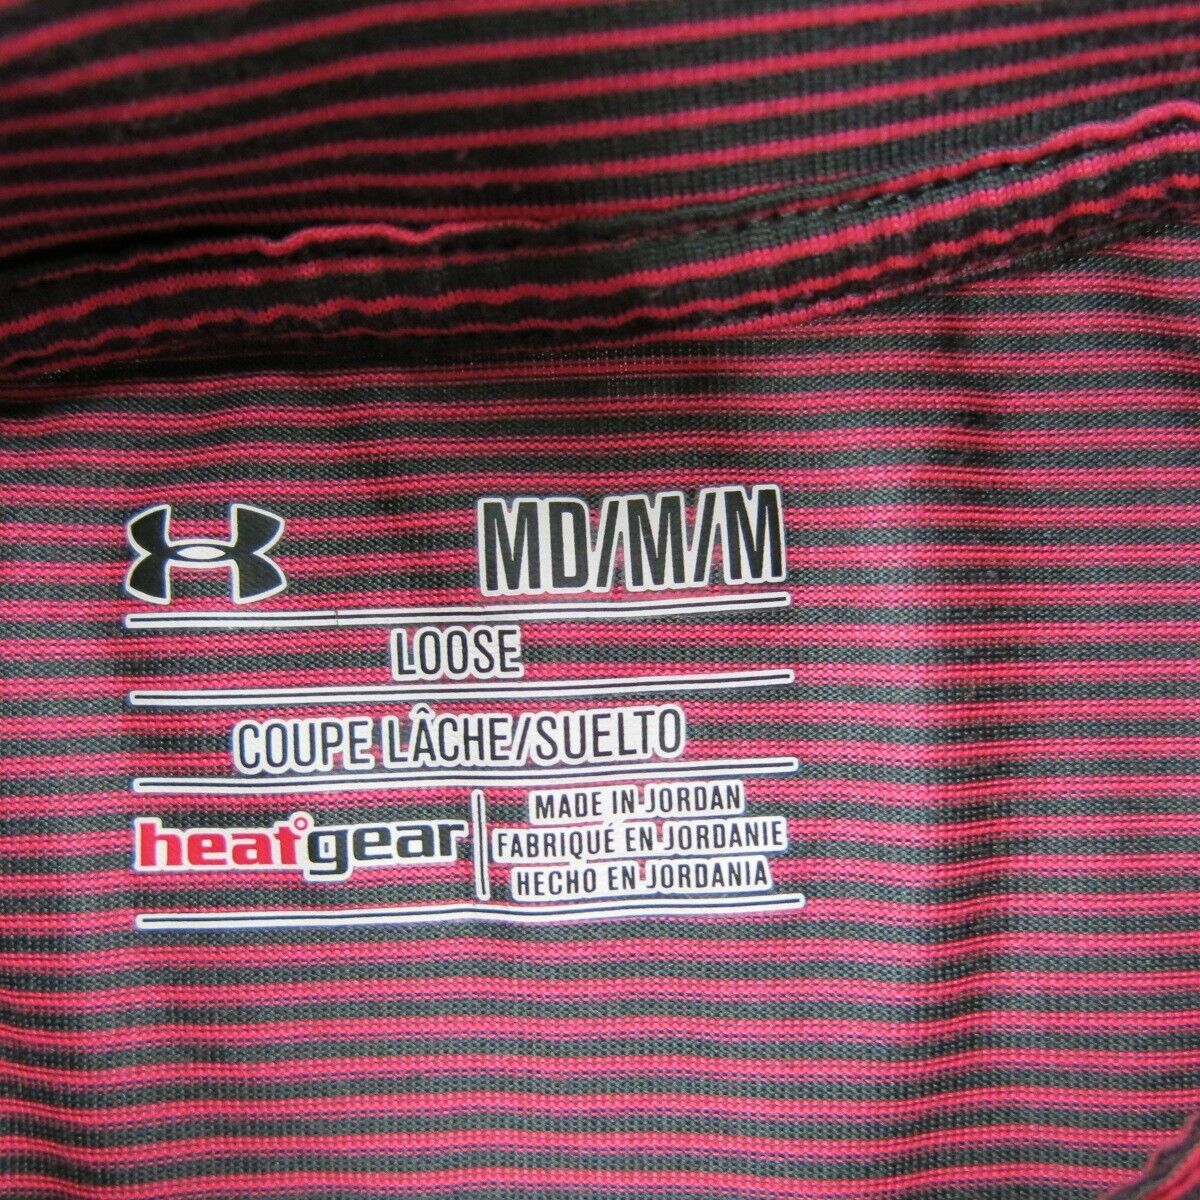 Under Armour Womens Striped Zip Up Logo Athletics Sweatshirt Red Black Size M